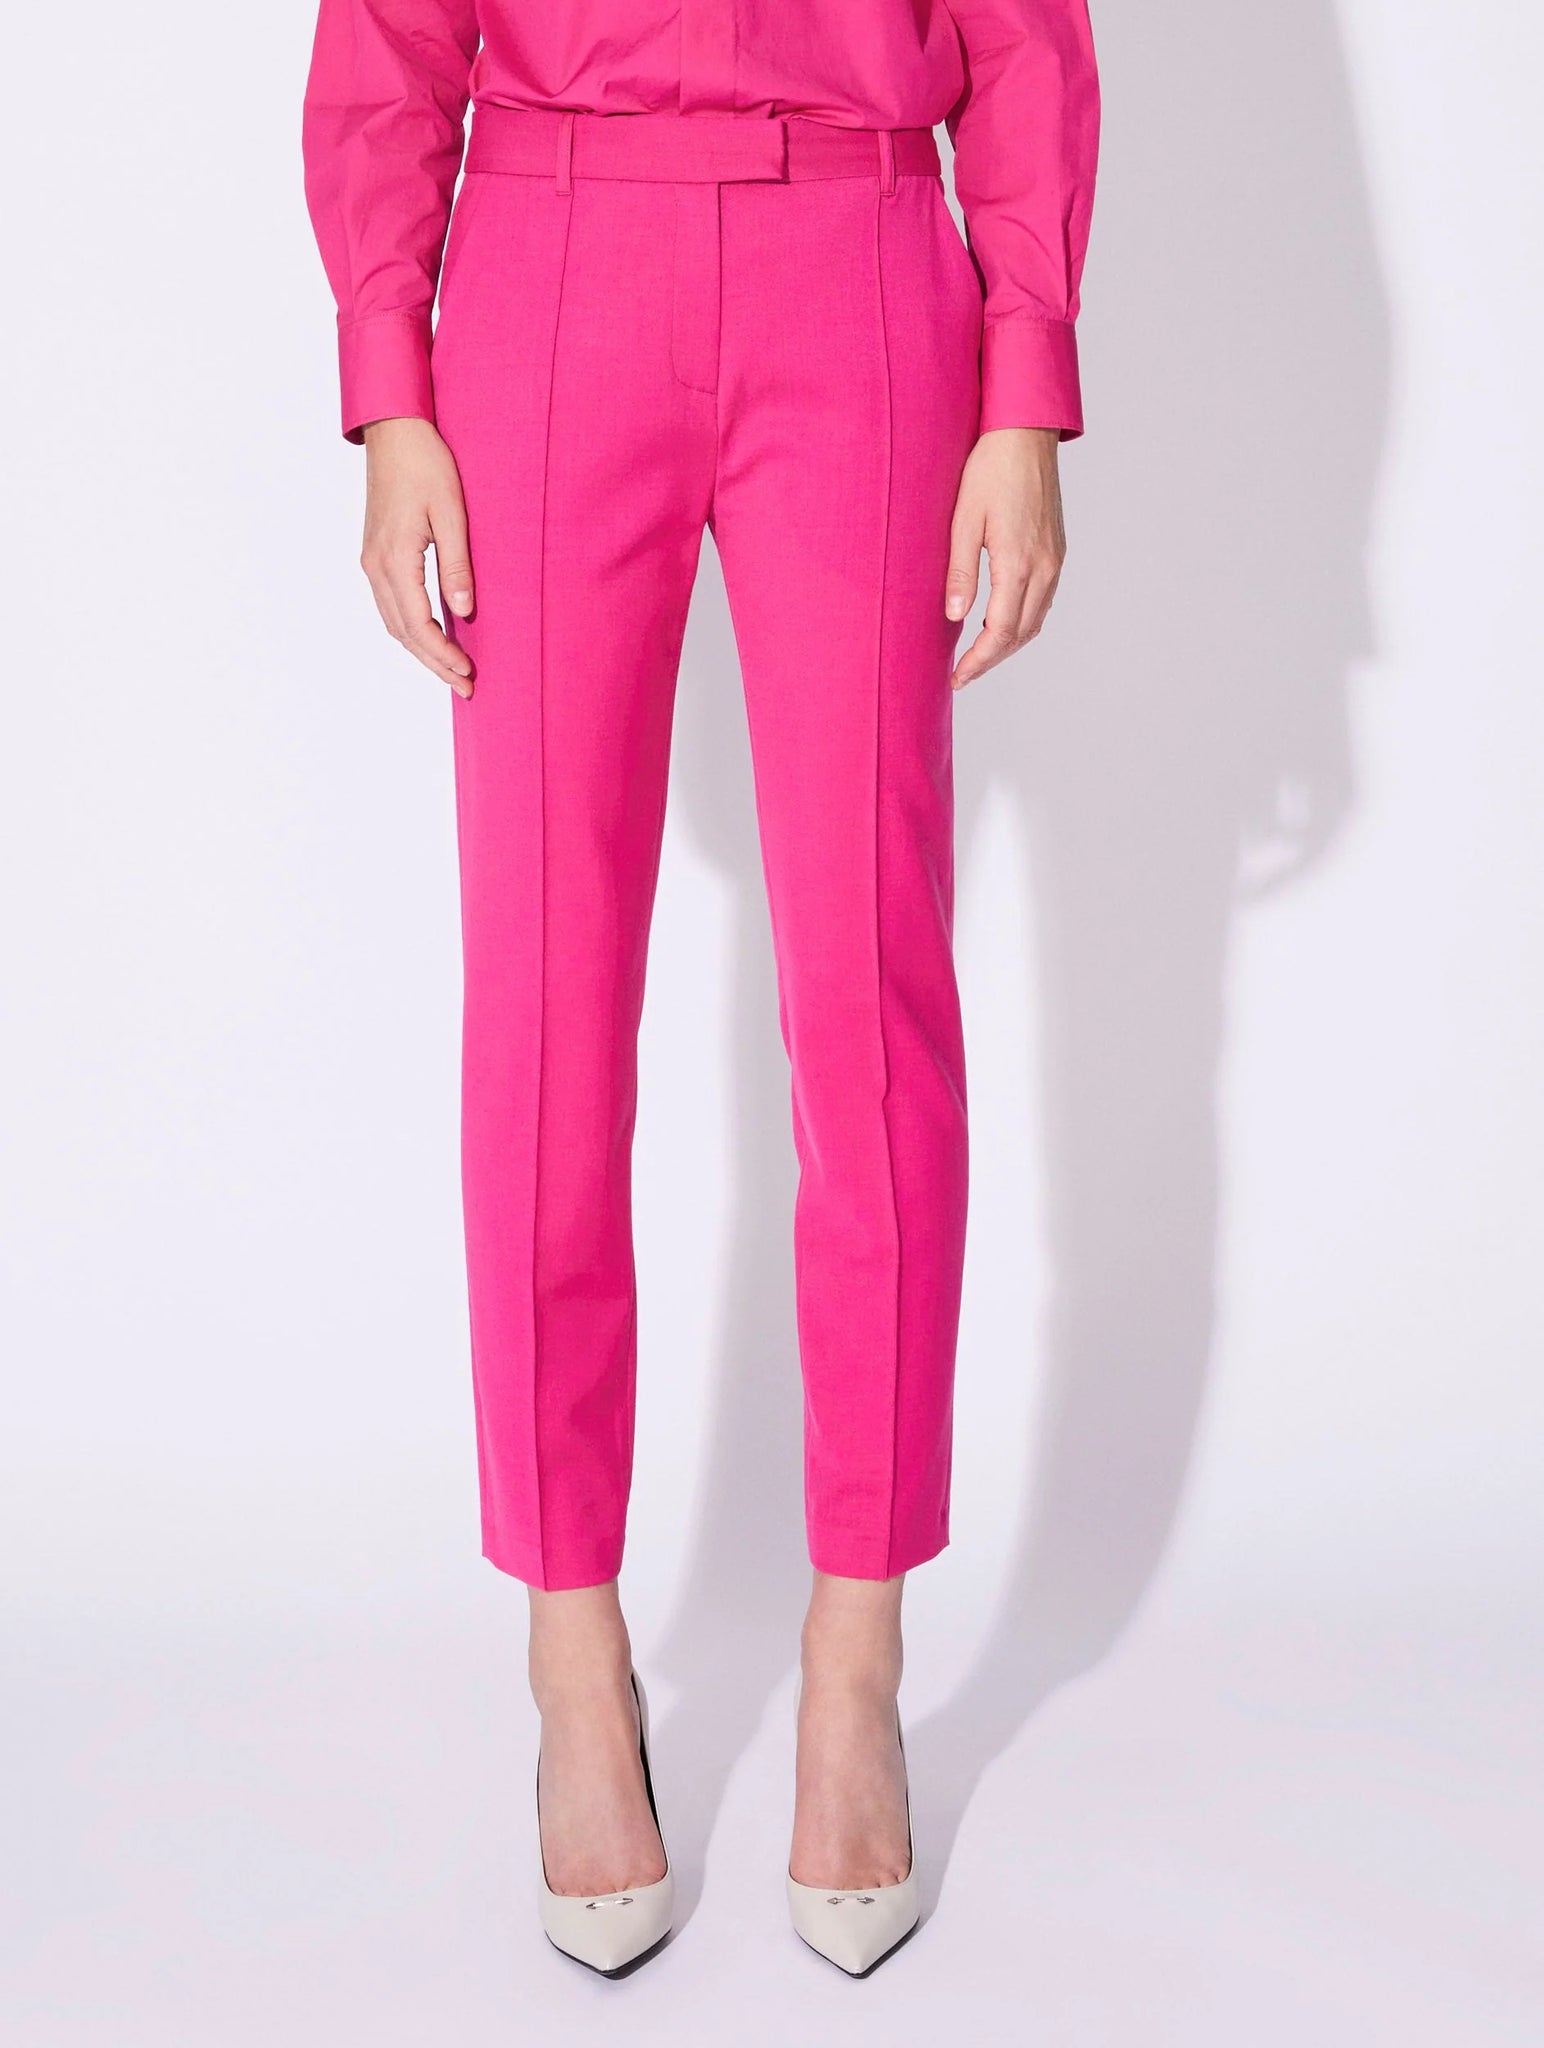 BB bright pink pants